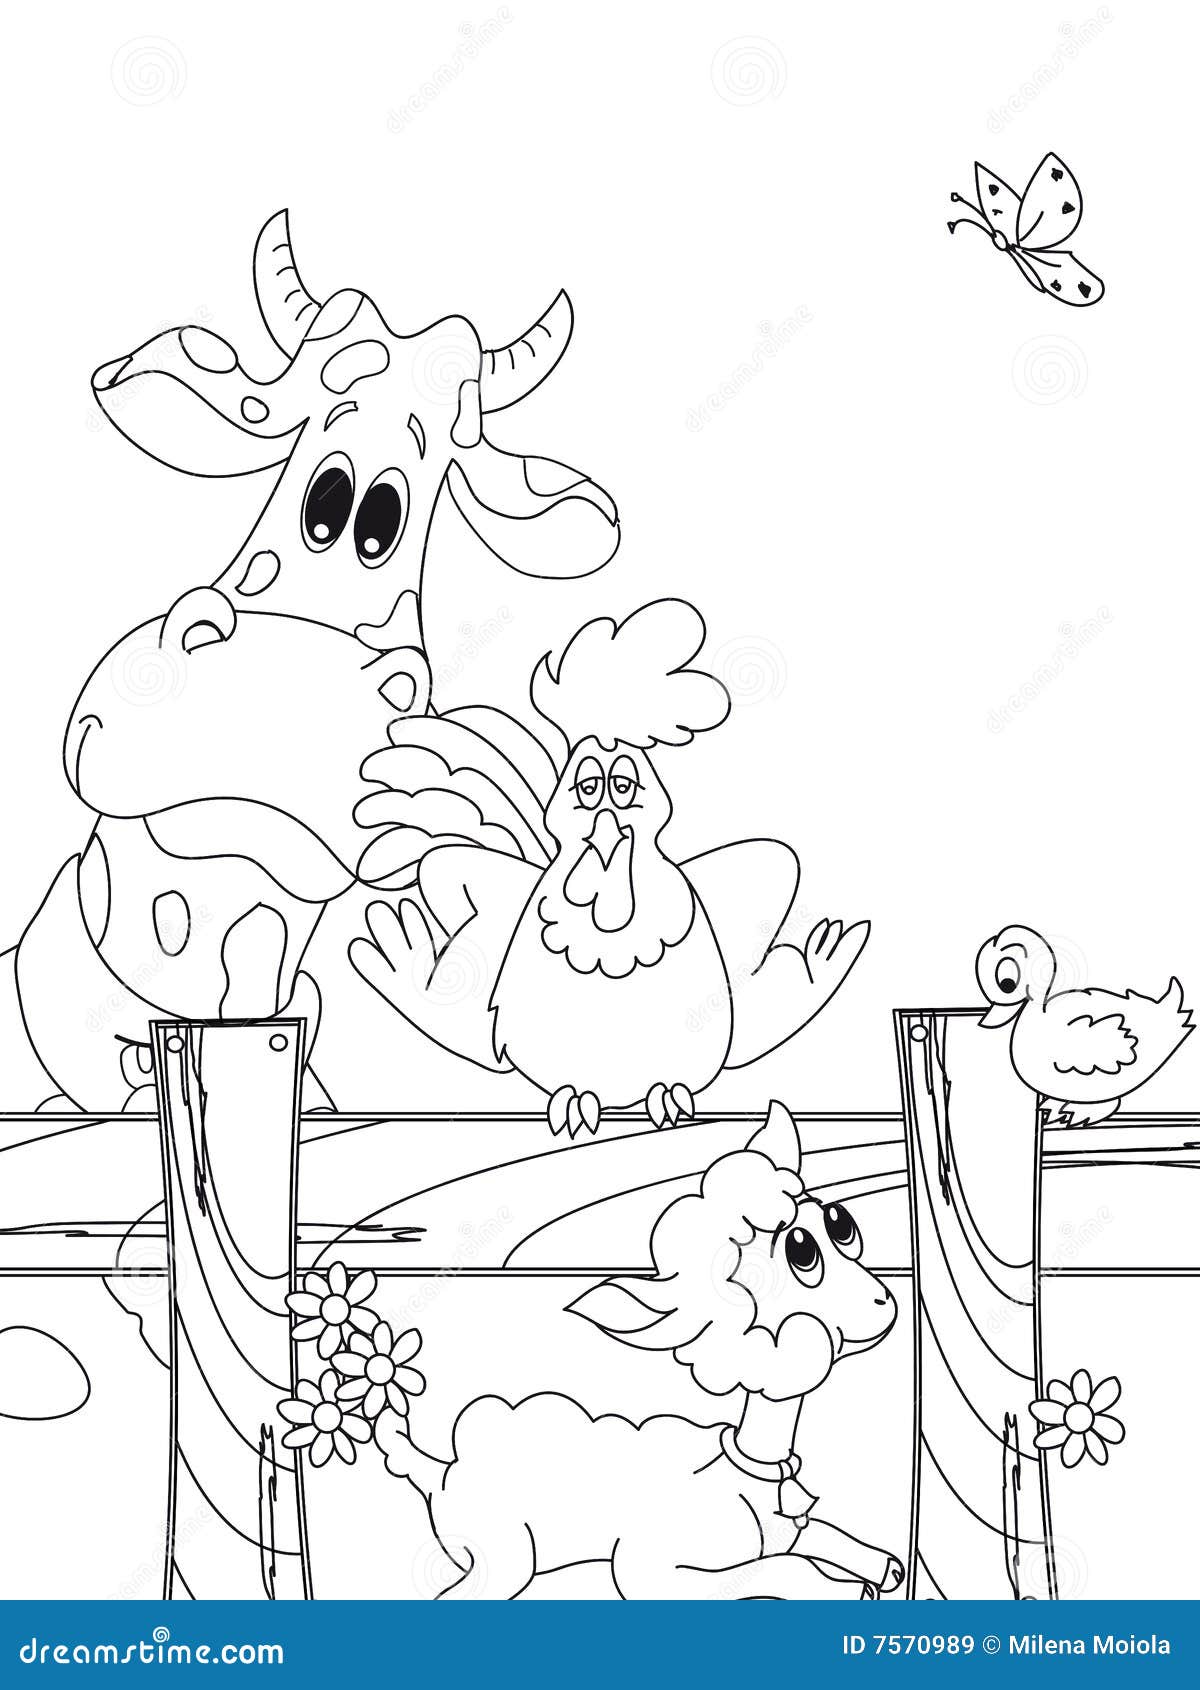 royalty free stock images farm animal cartoon image